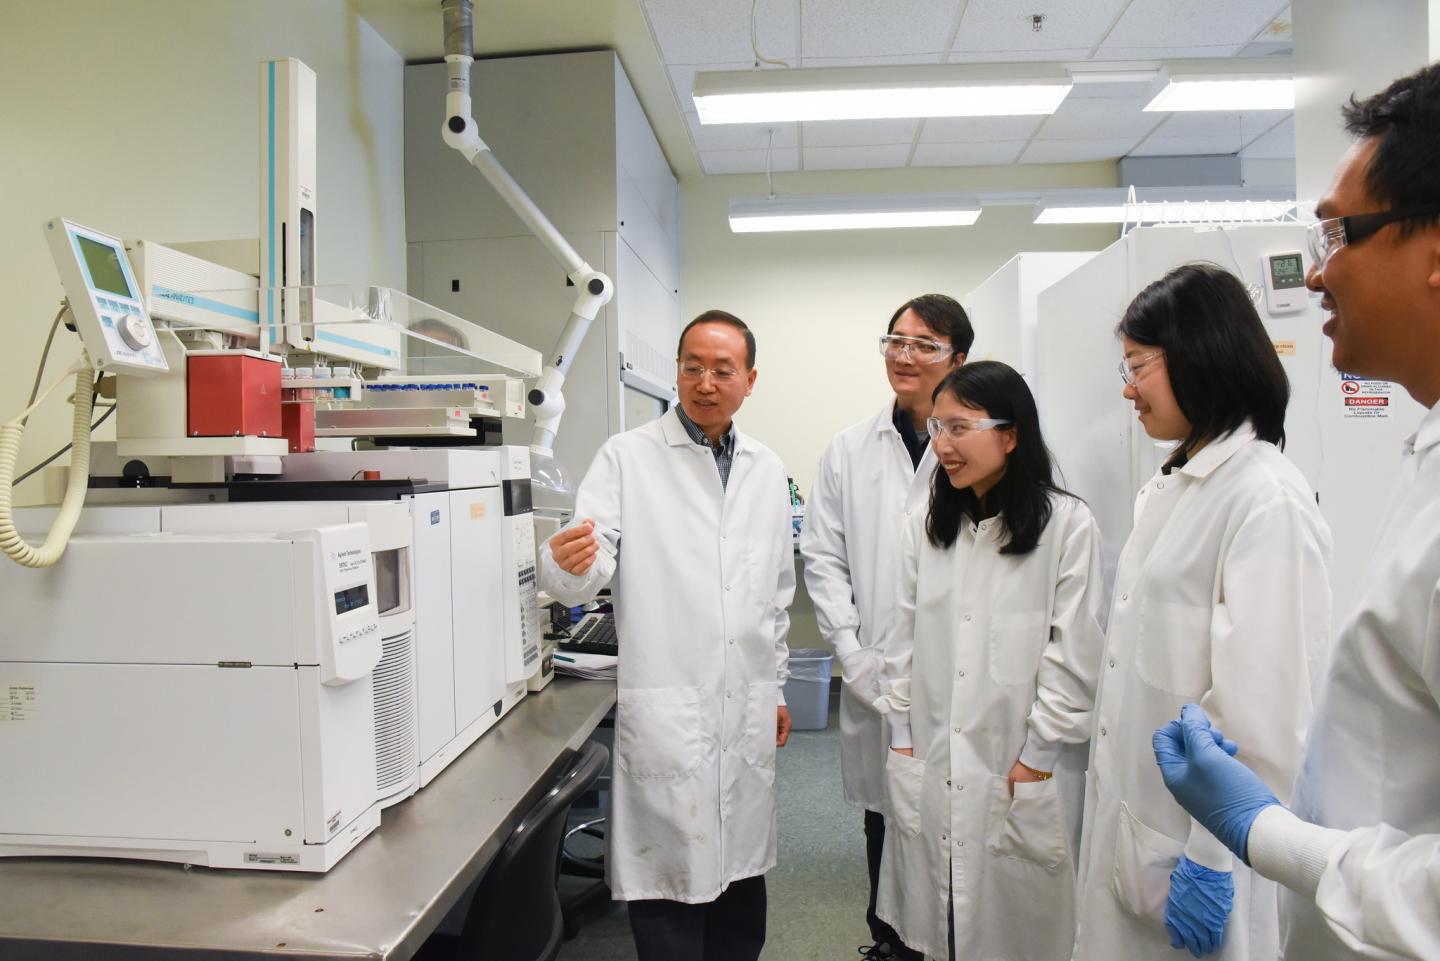 Hanwu Lei and Research Team